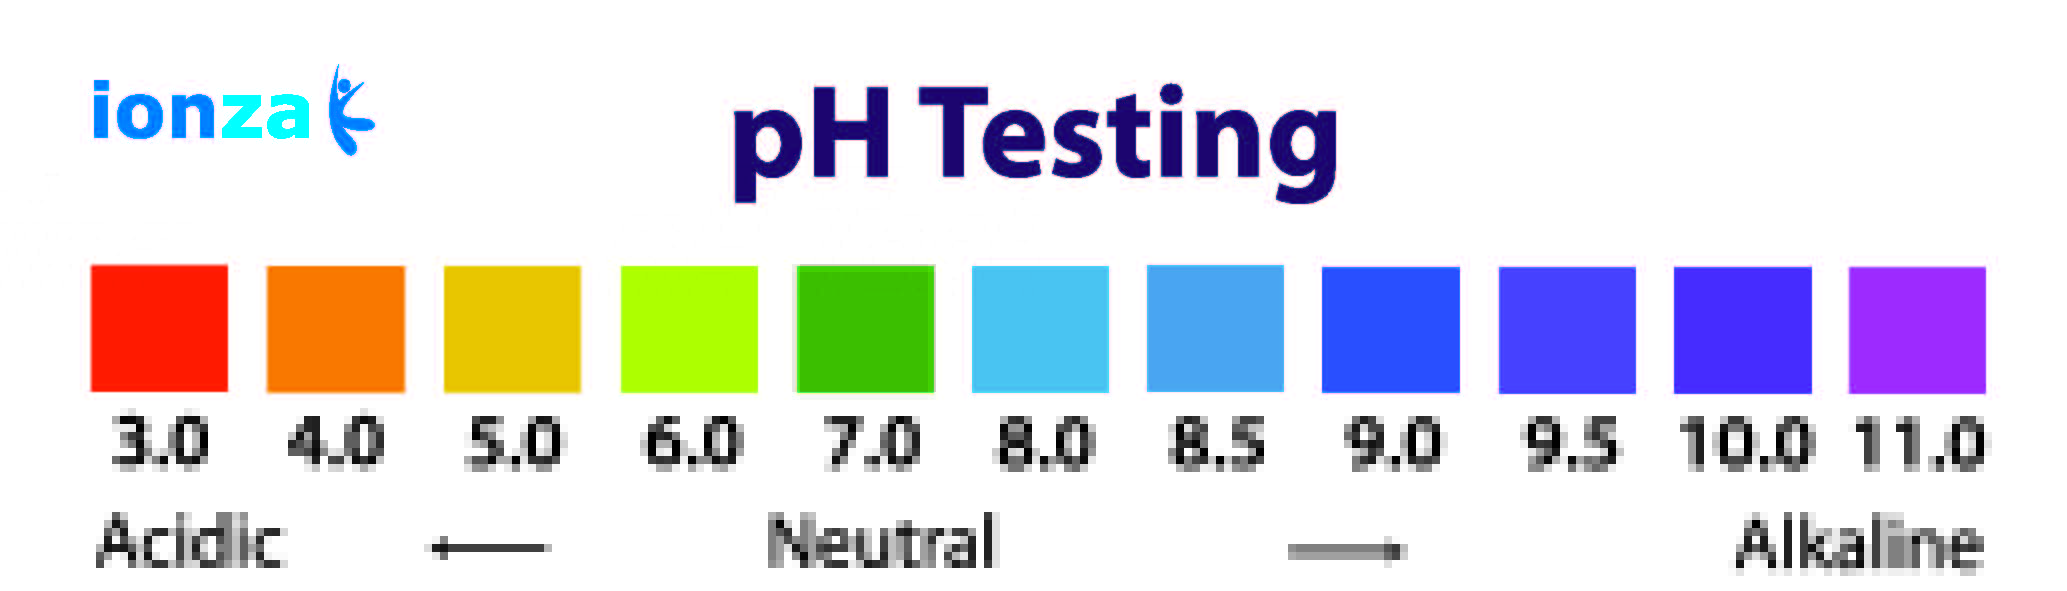 Alkaline Ph Level Chart